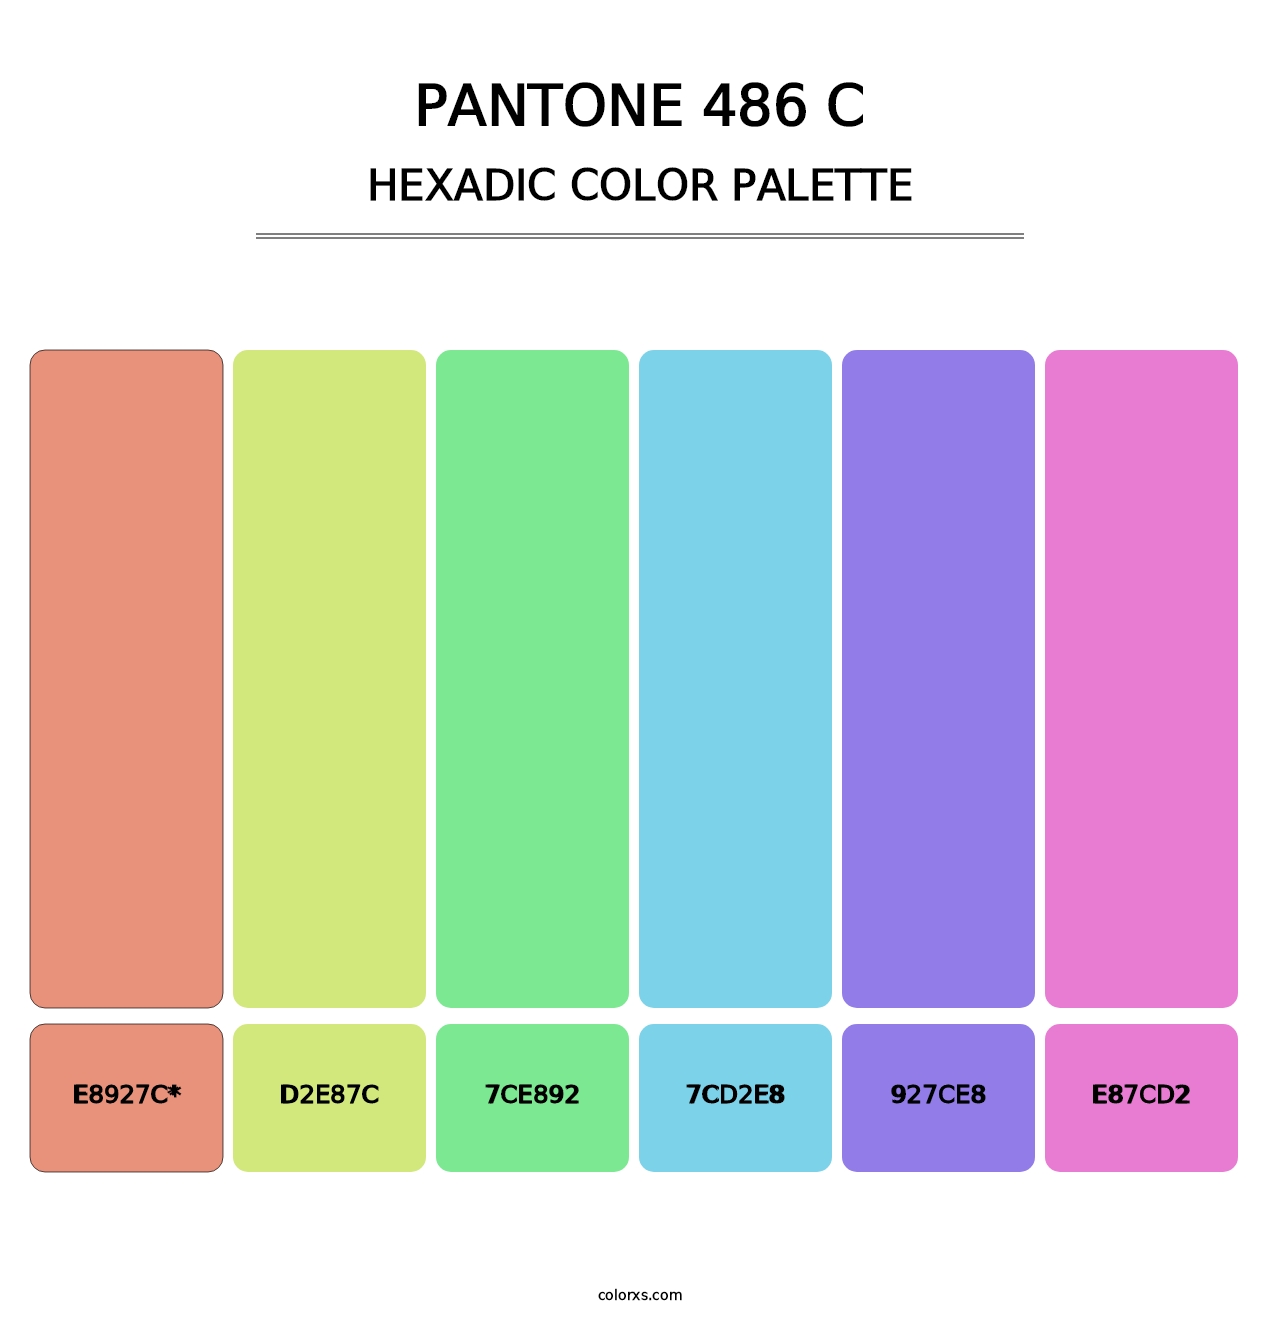 PANTONE 486 C - Hexadic Color Palette